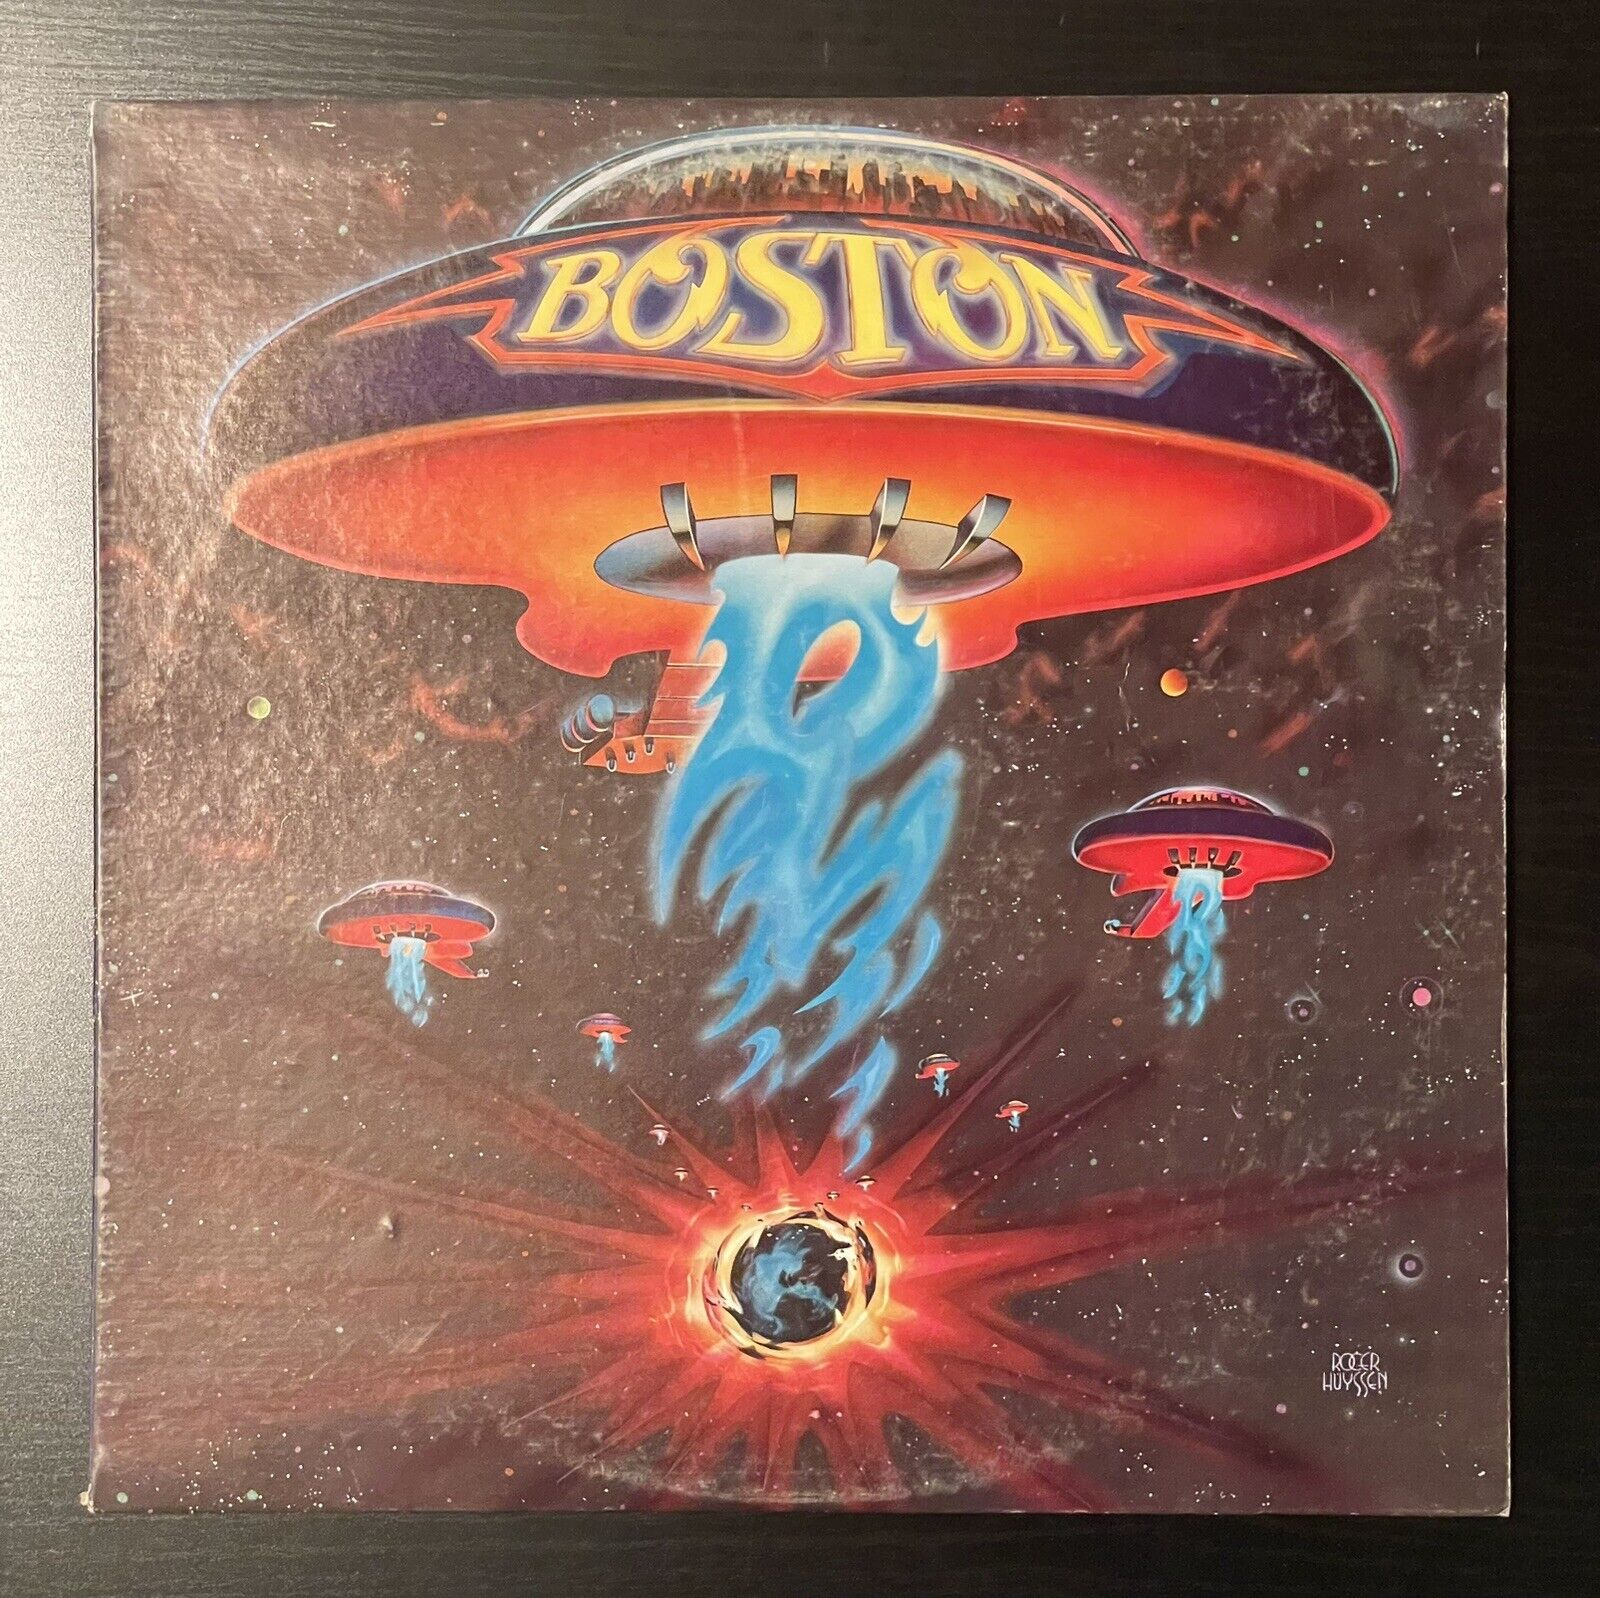 Boston - Self Titled Debut Vinyl LP - 1976 First Press - PE-34188 - Epic Records